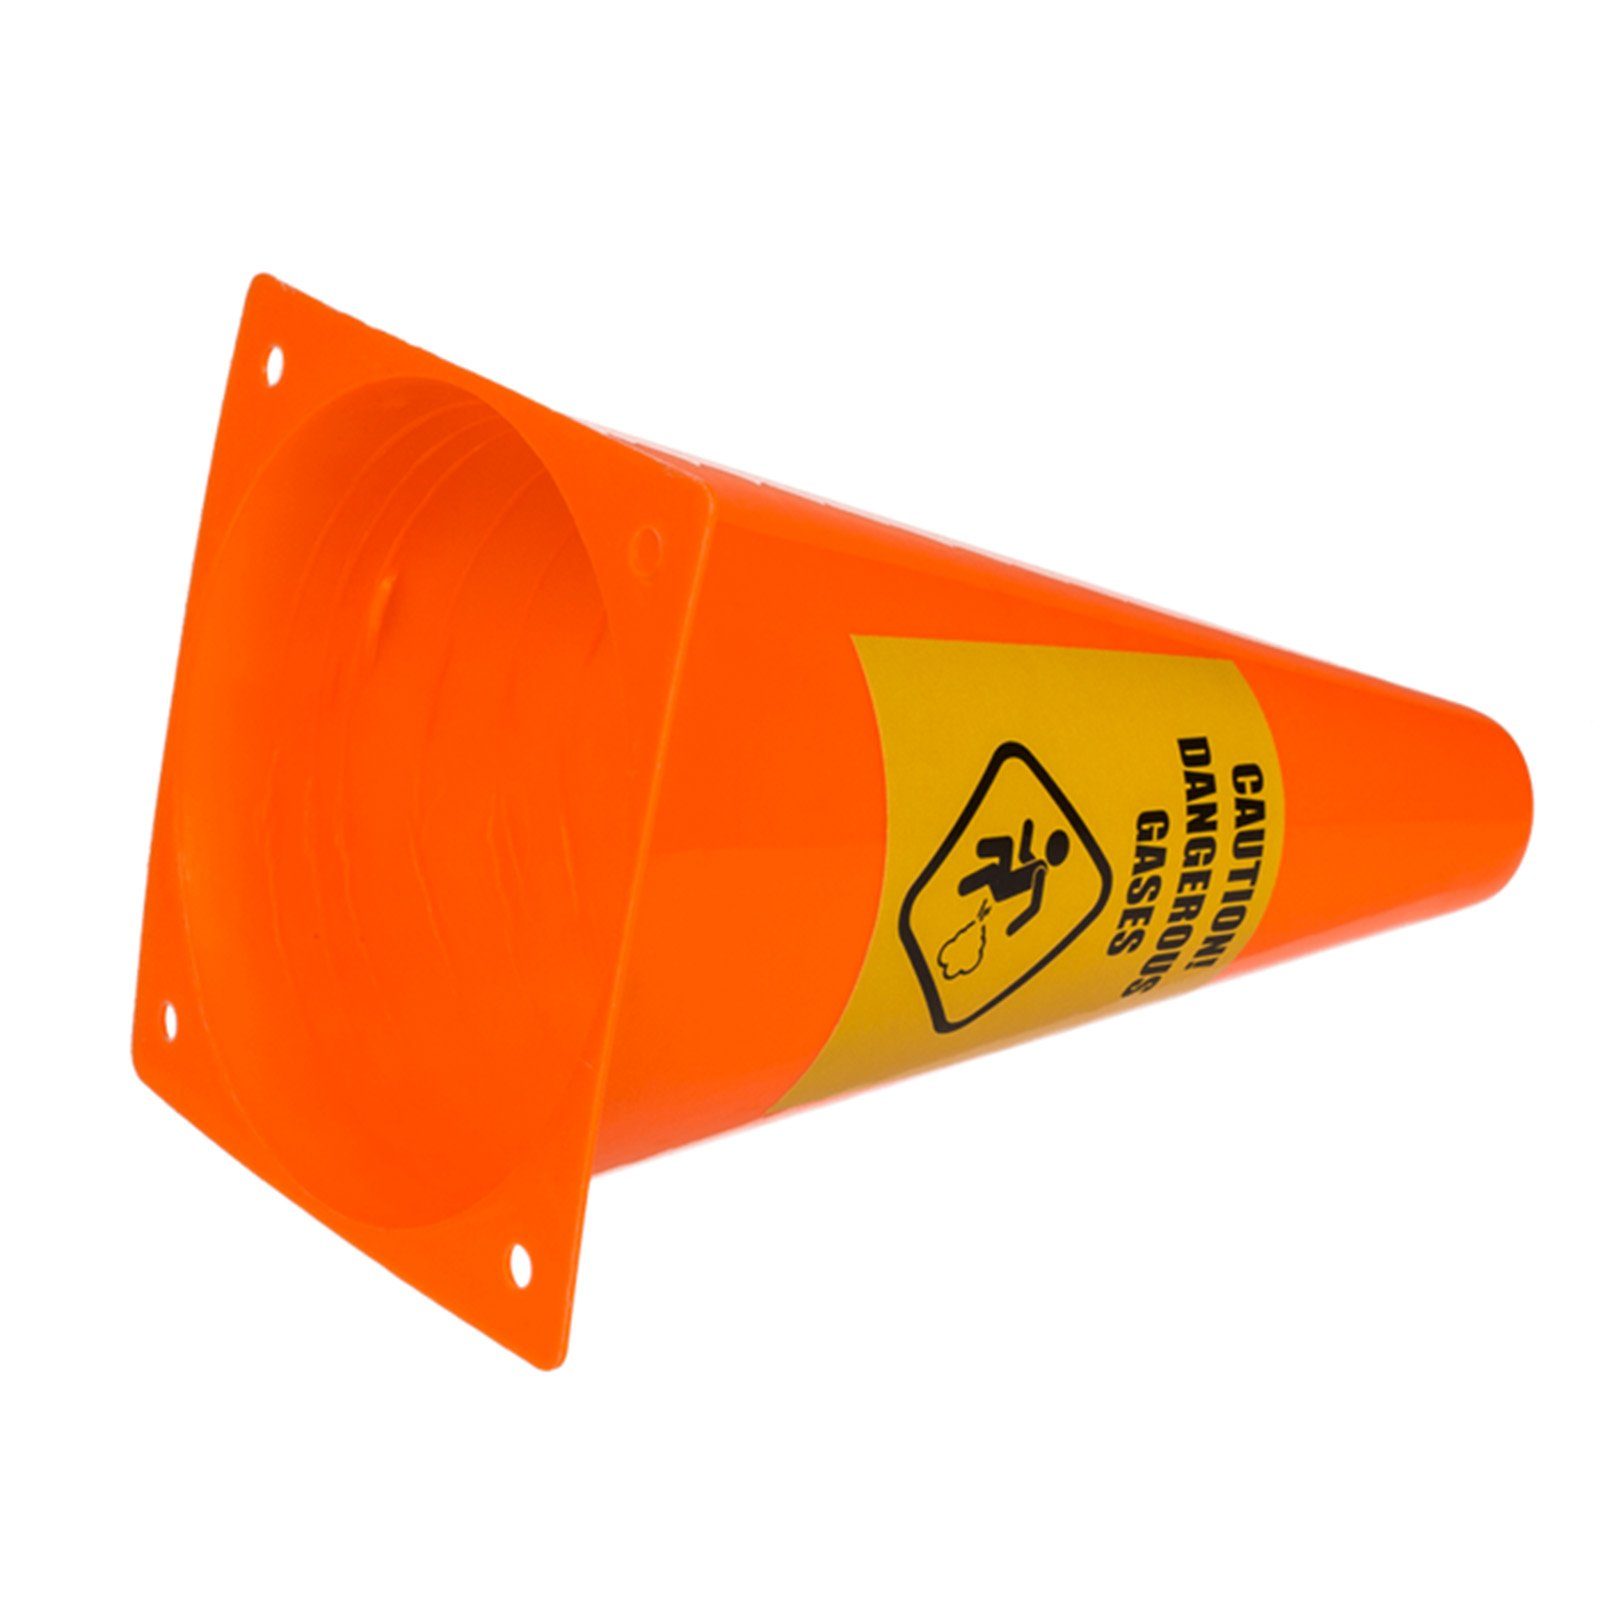 Out of the Furz und Piktrogramm Dangerous Gases Caution Pylone Toil Blue Leitkegel Papierdekoration mit